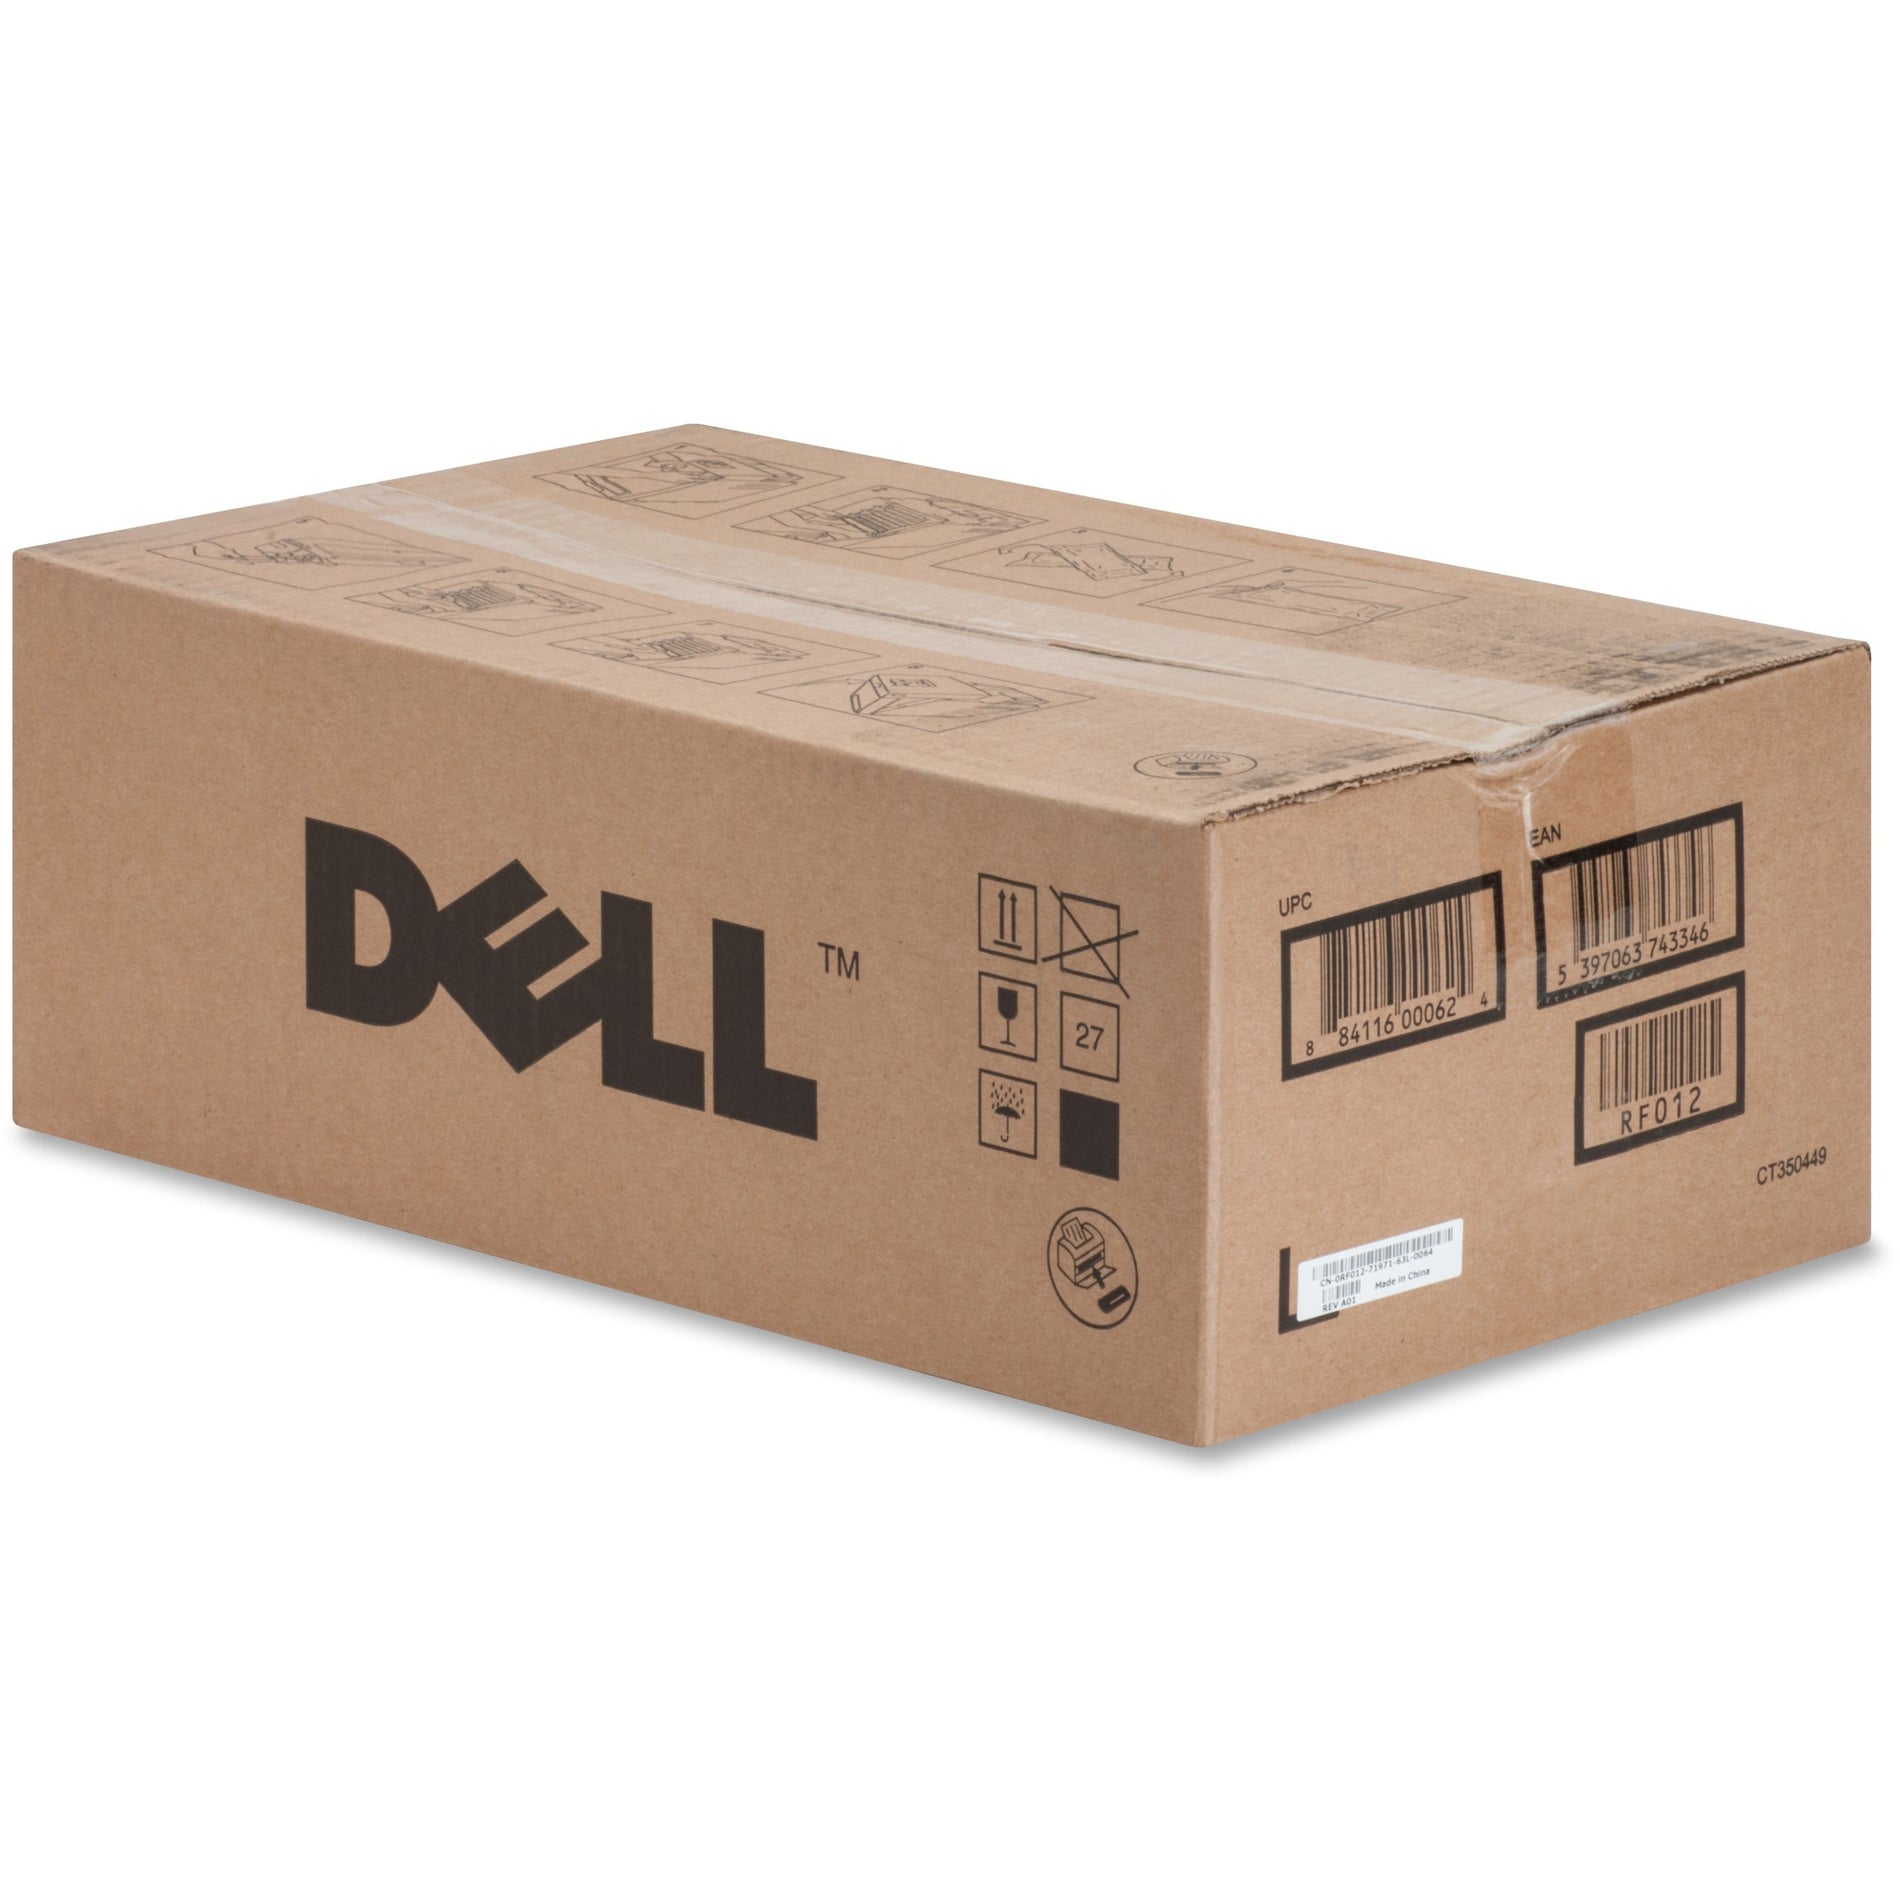 Dell RF012 3110 Toner Cartridge, Cyan, 4000 Page Yield